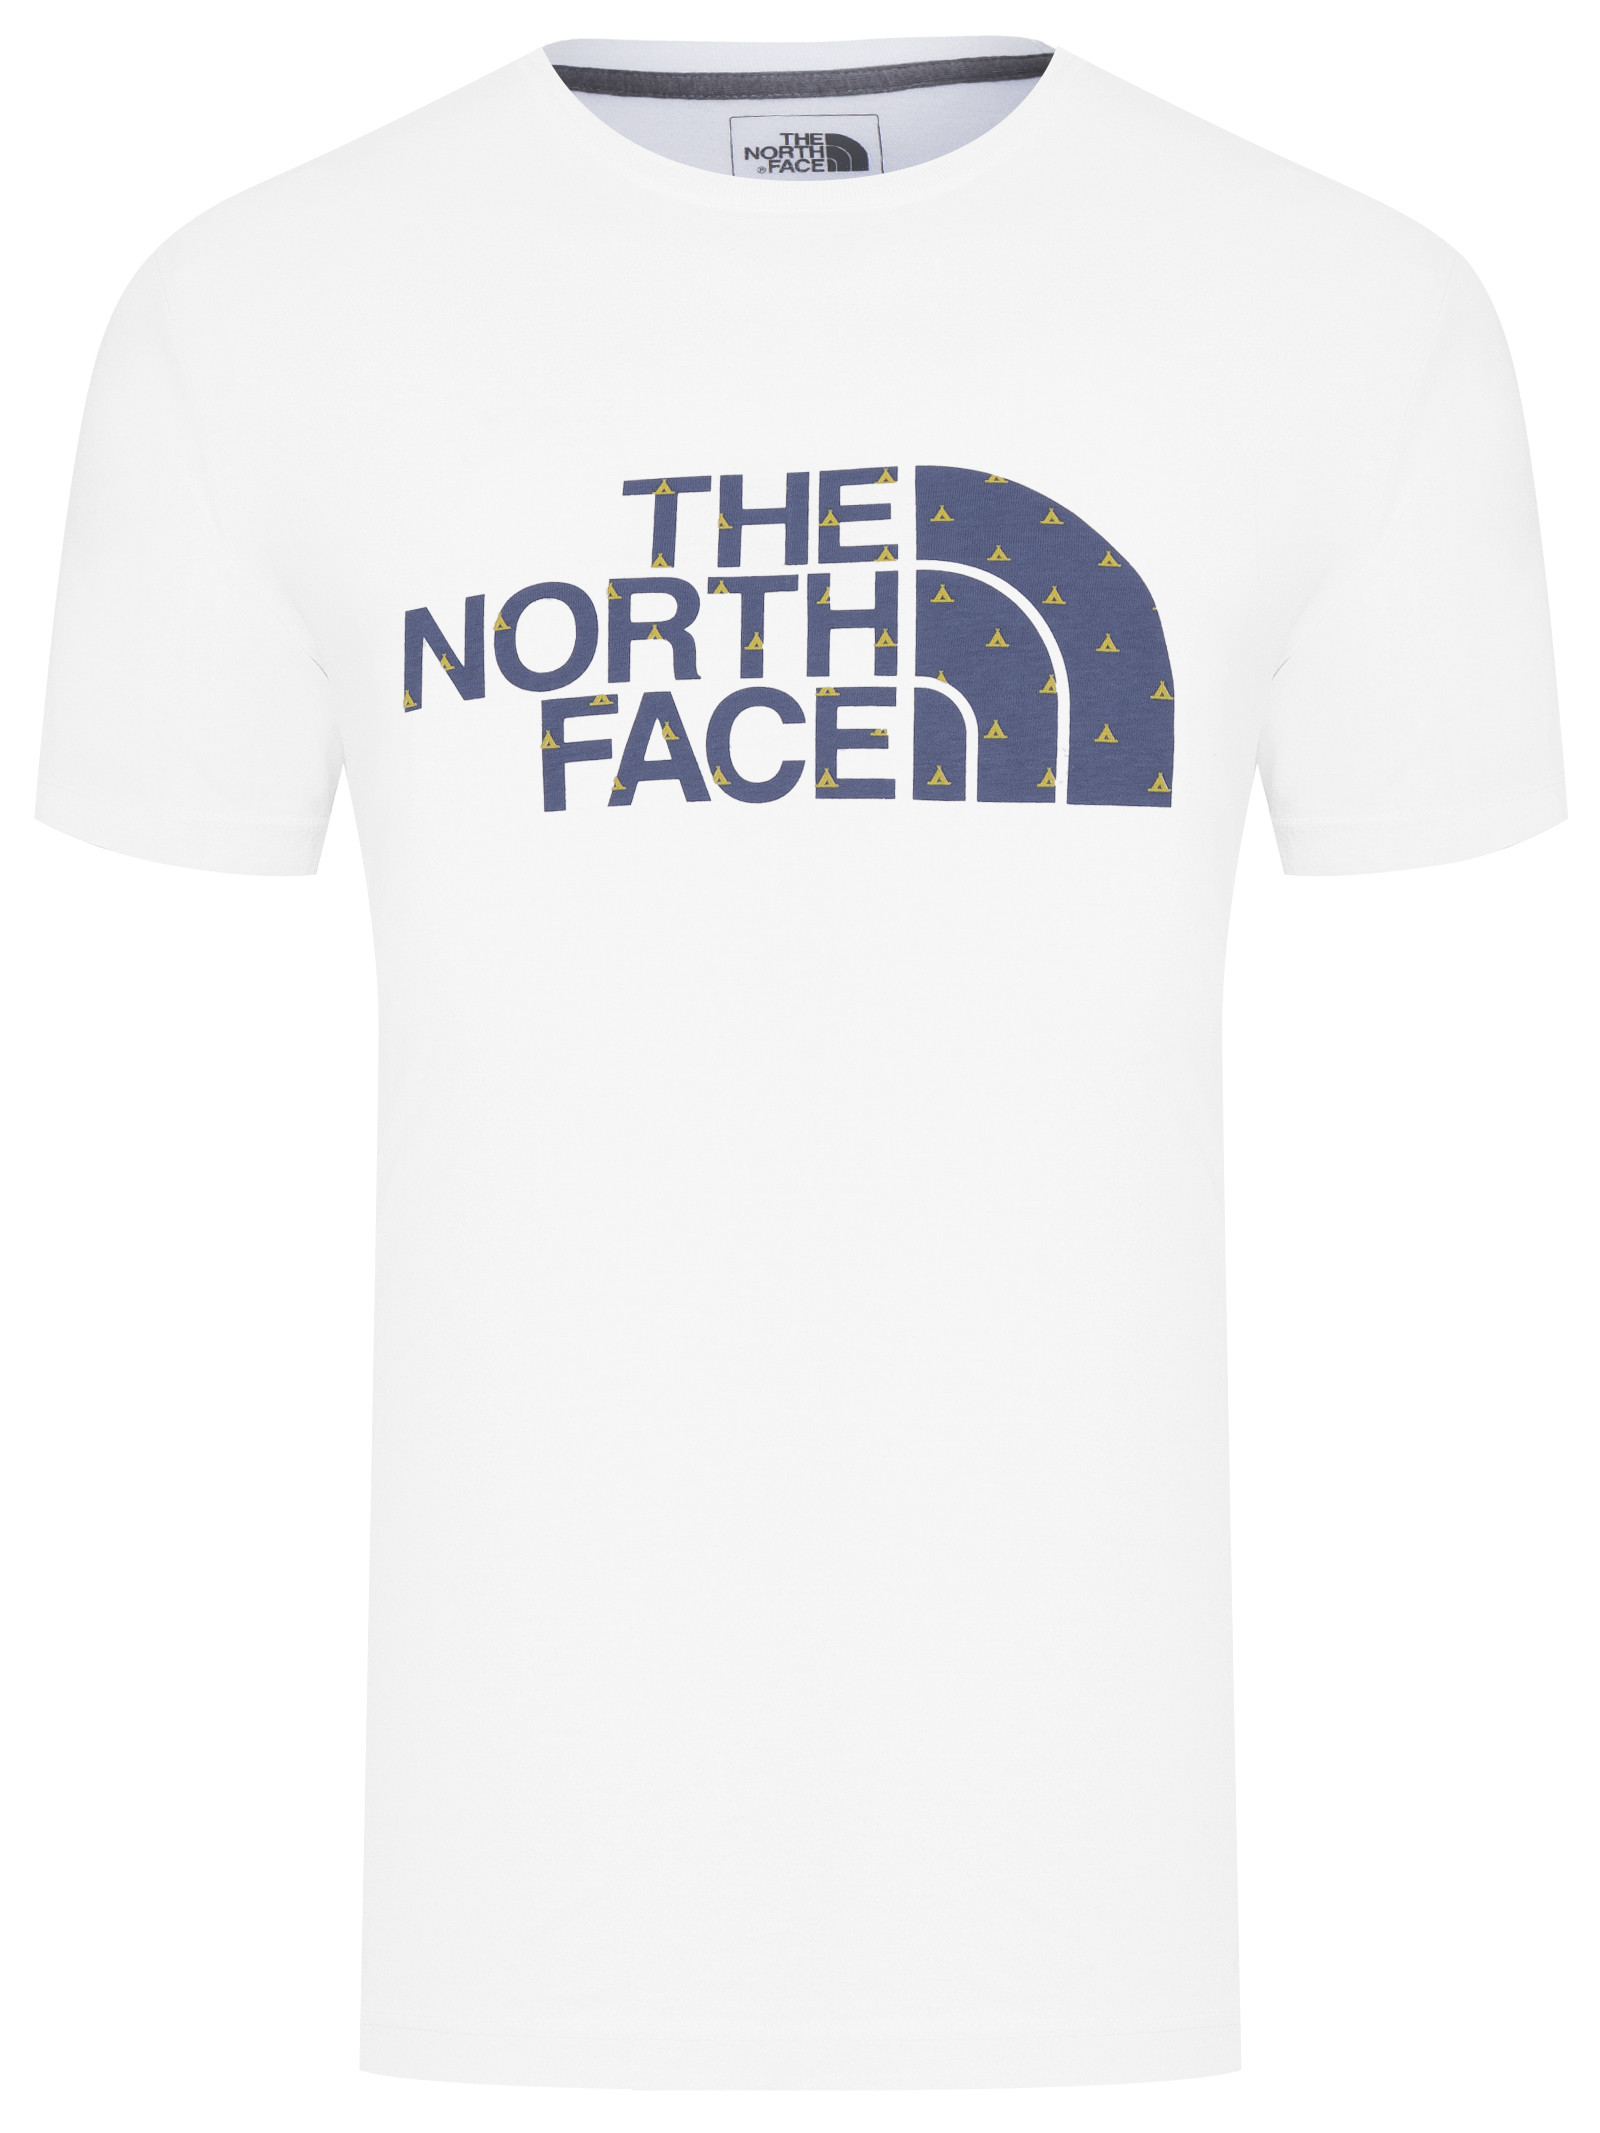 Camiseta Masculina Half Dome Logo - The North Face - Branco - Shop2gether